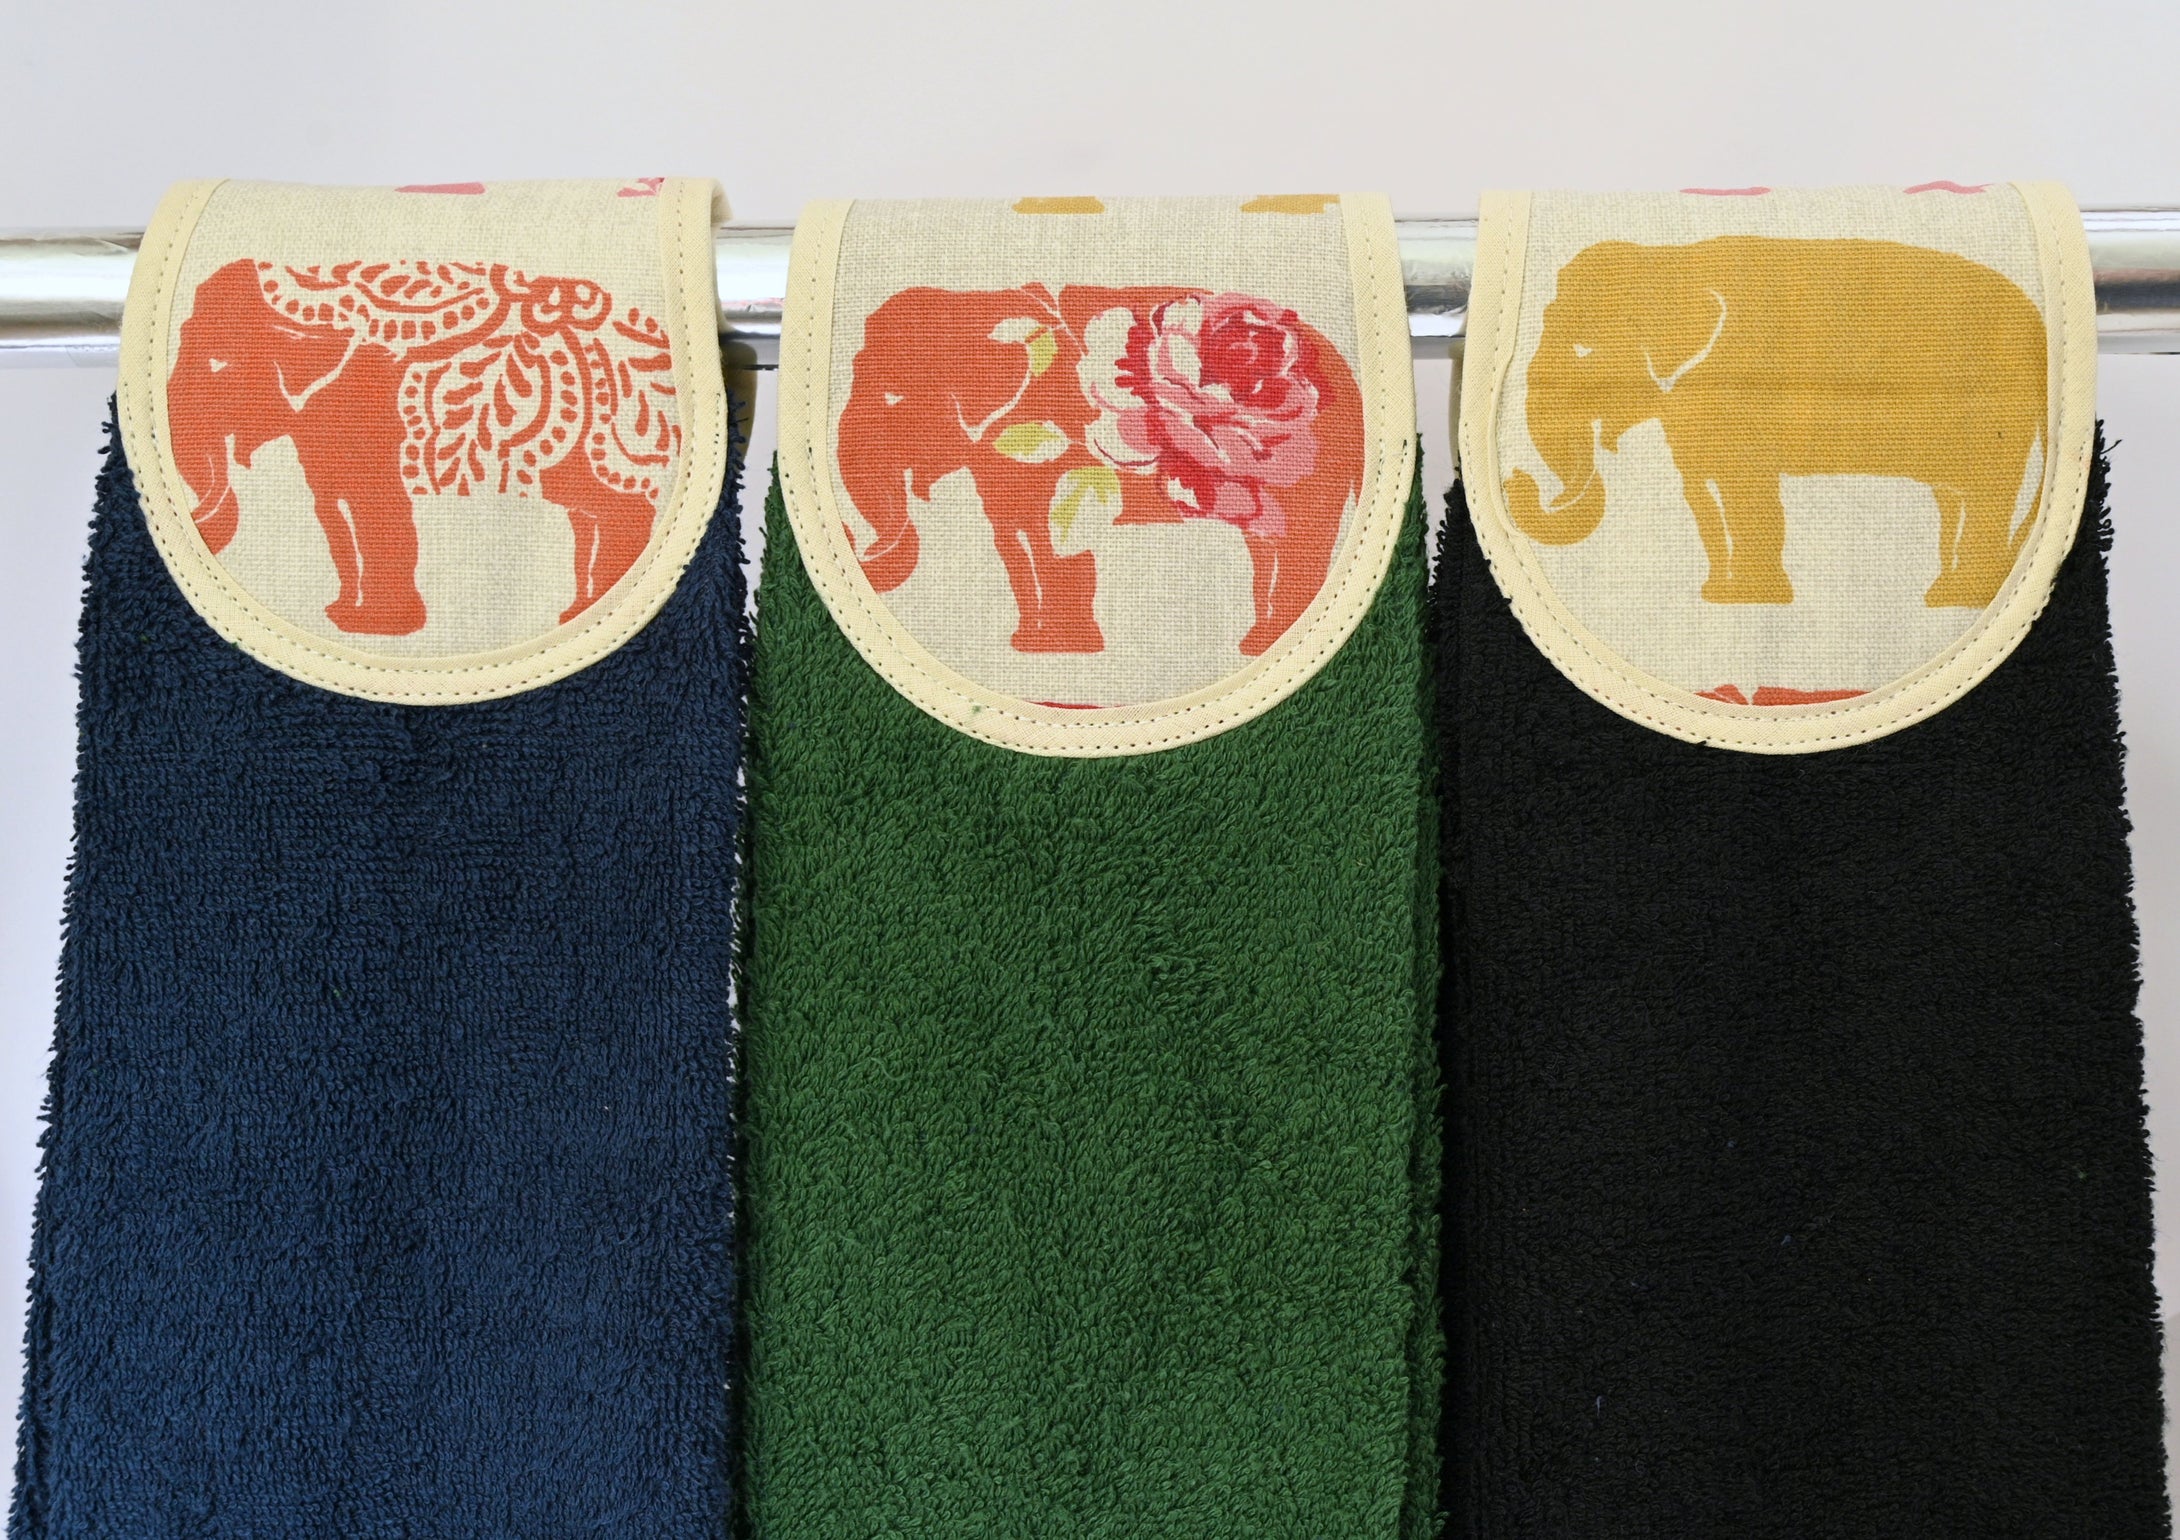 Hang ups, Kitchen towels, Spice Elephants on Navy Blue, Green or Black Towel